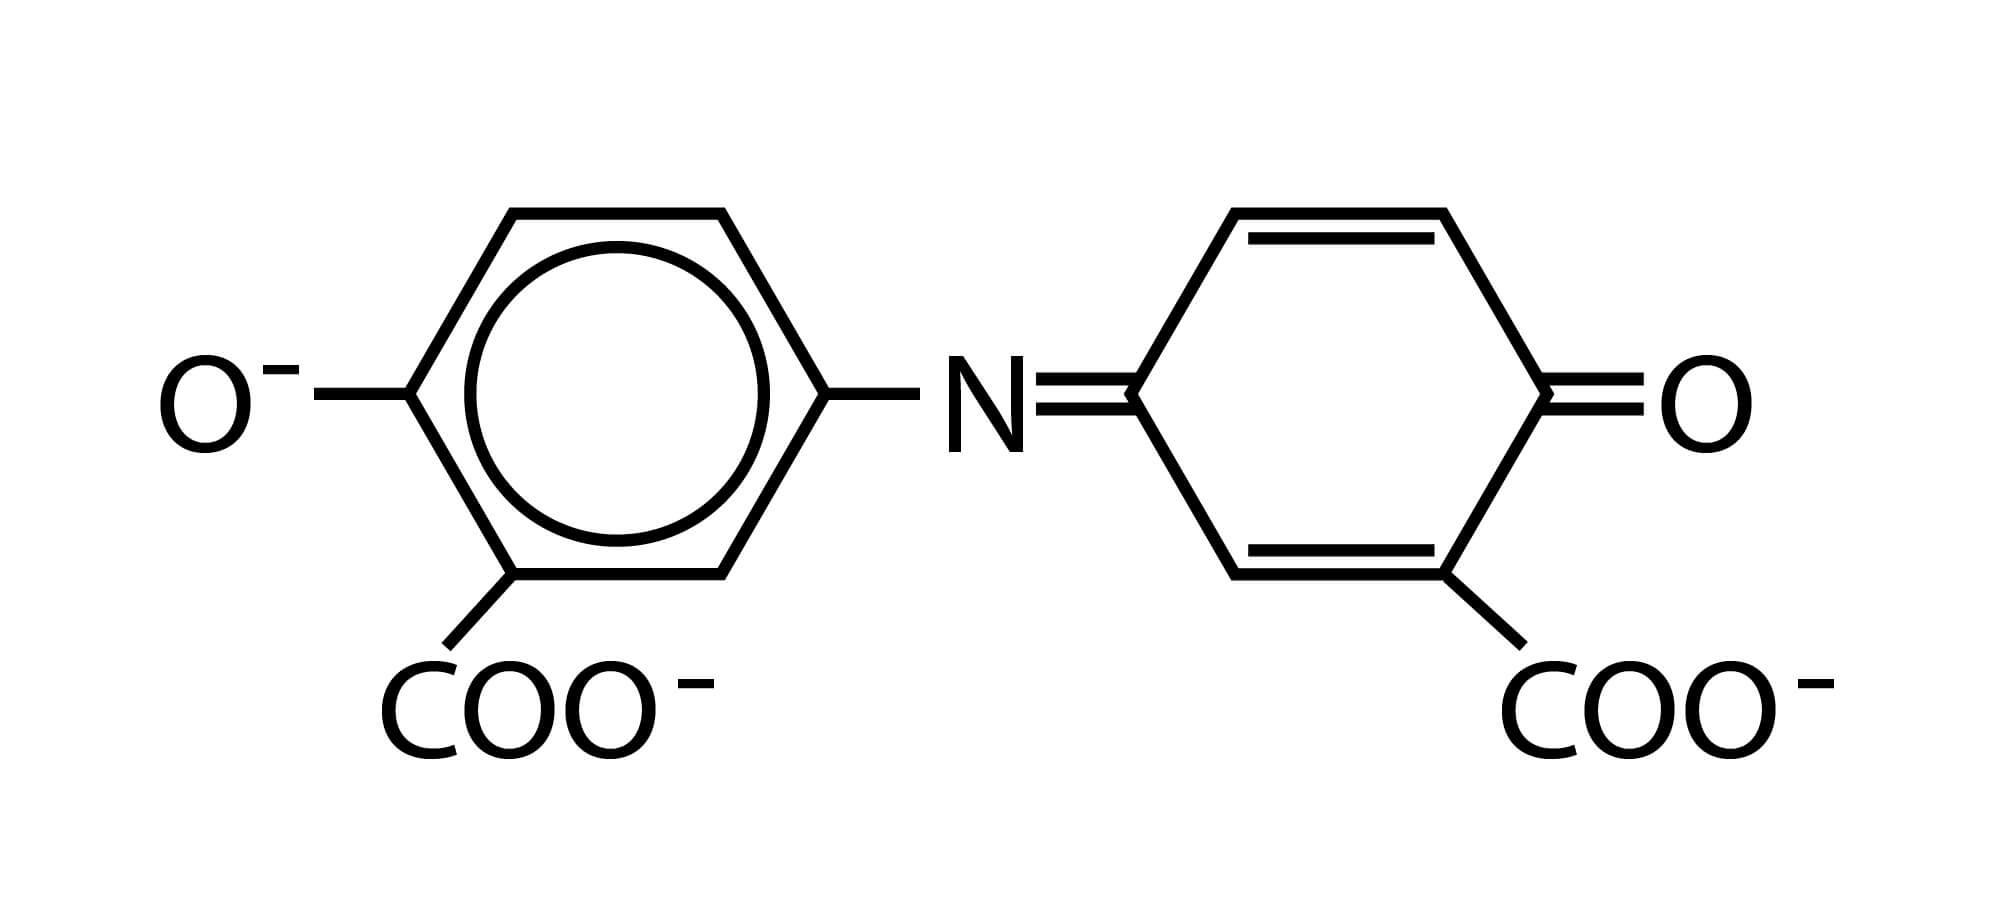 Fe(CN)5NO2  nitroferricyanide formation of indosalicylate,